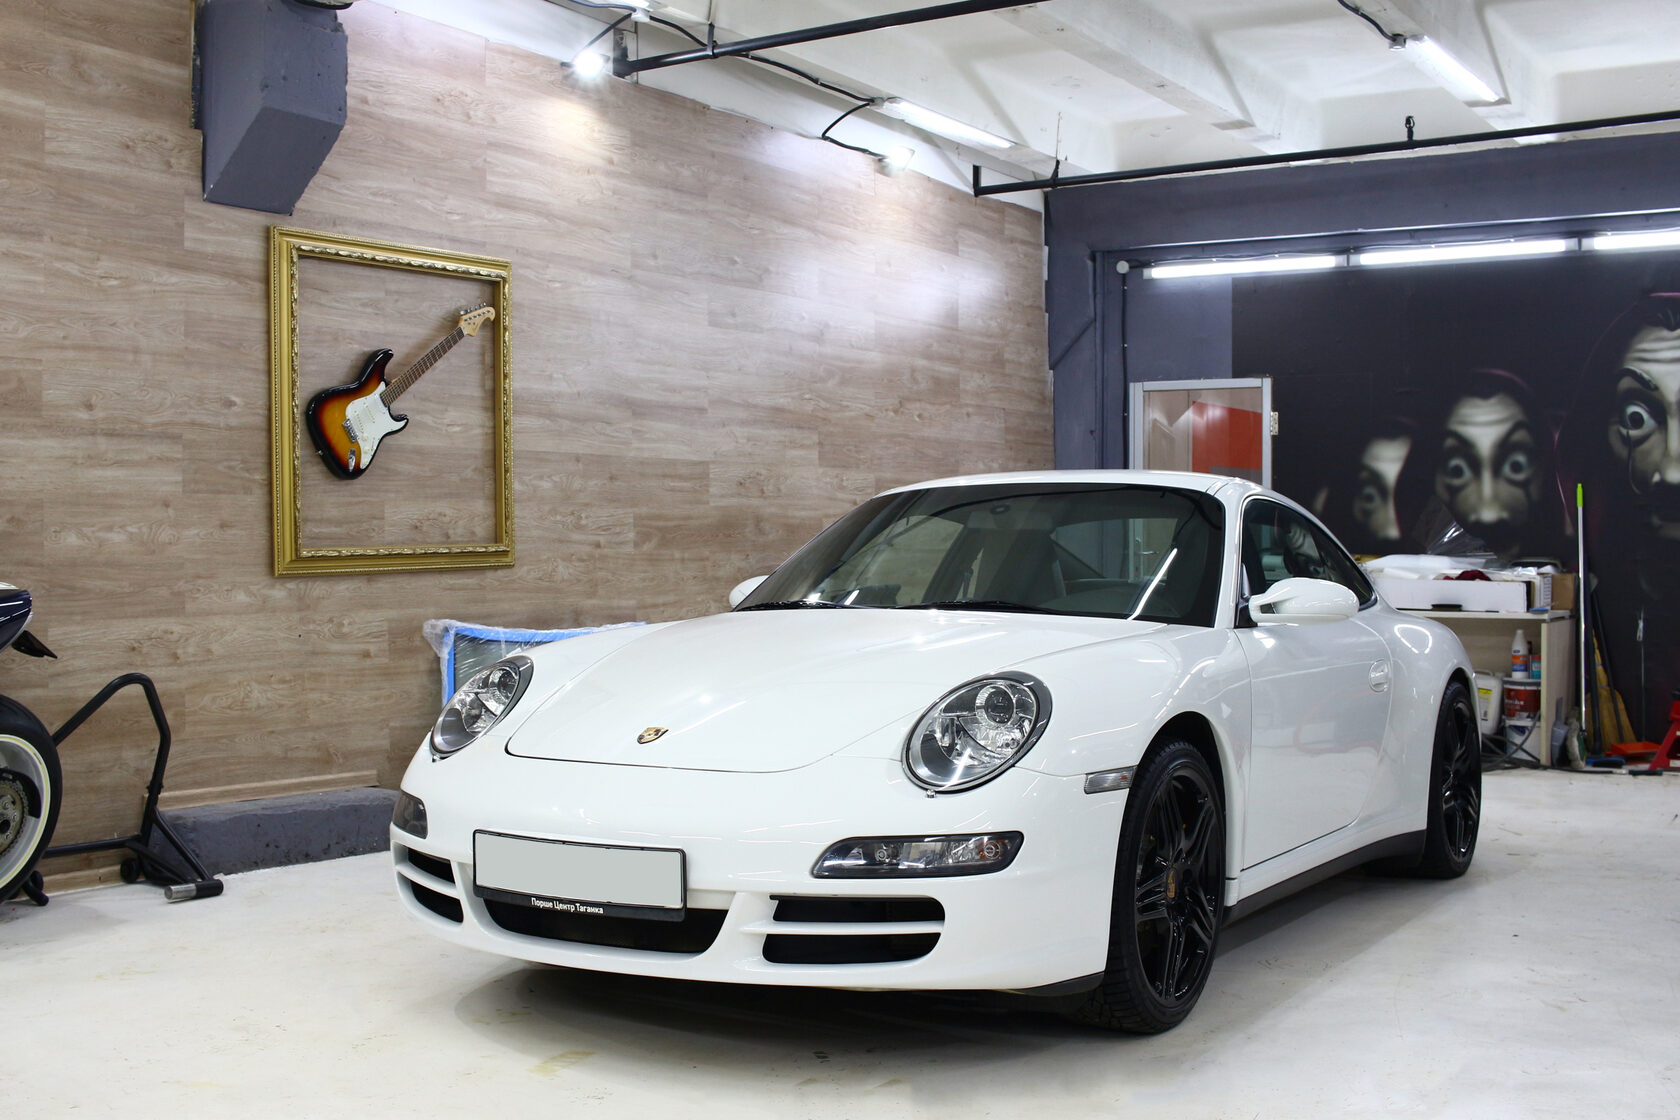 Porsche 911 Carrera 4S, детейлинг, реставрация, покраска кожи, полирвока фар, детейлинг центр москва